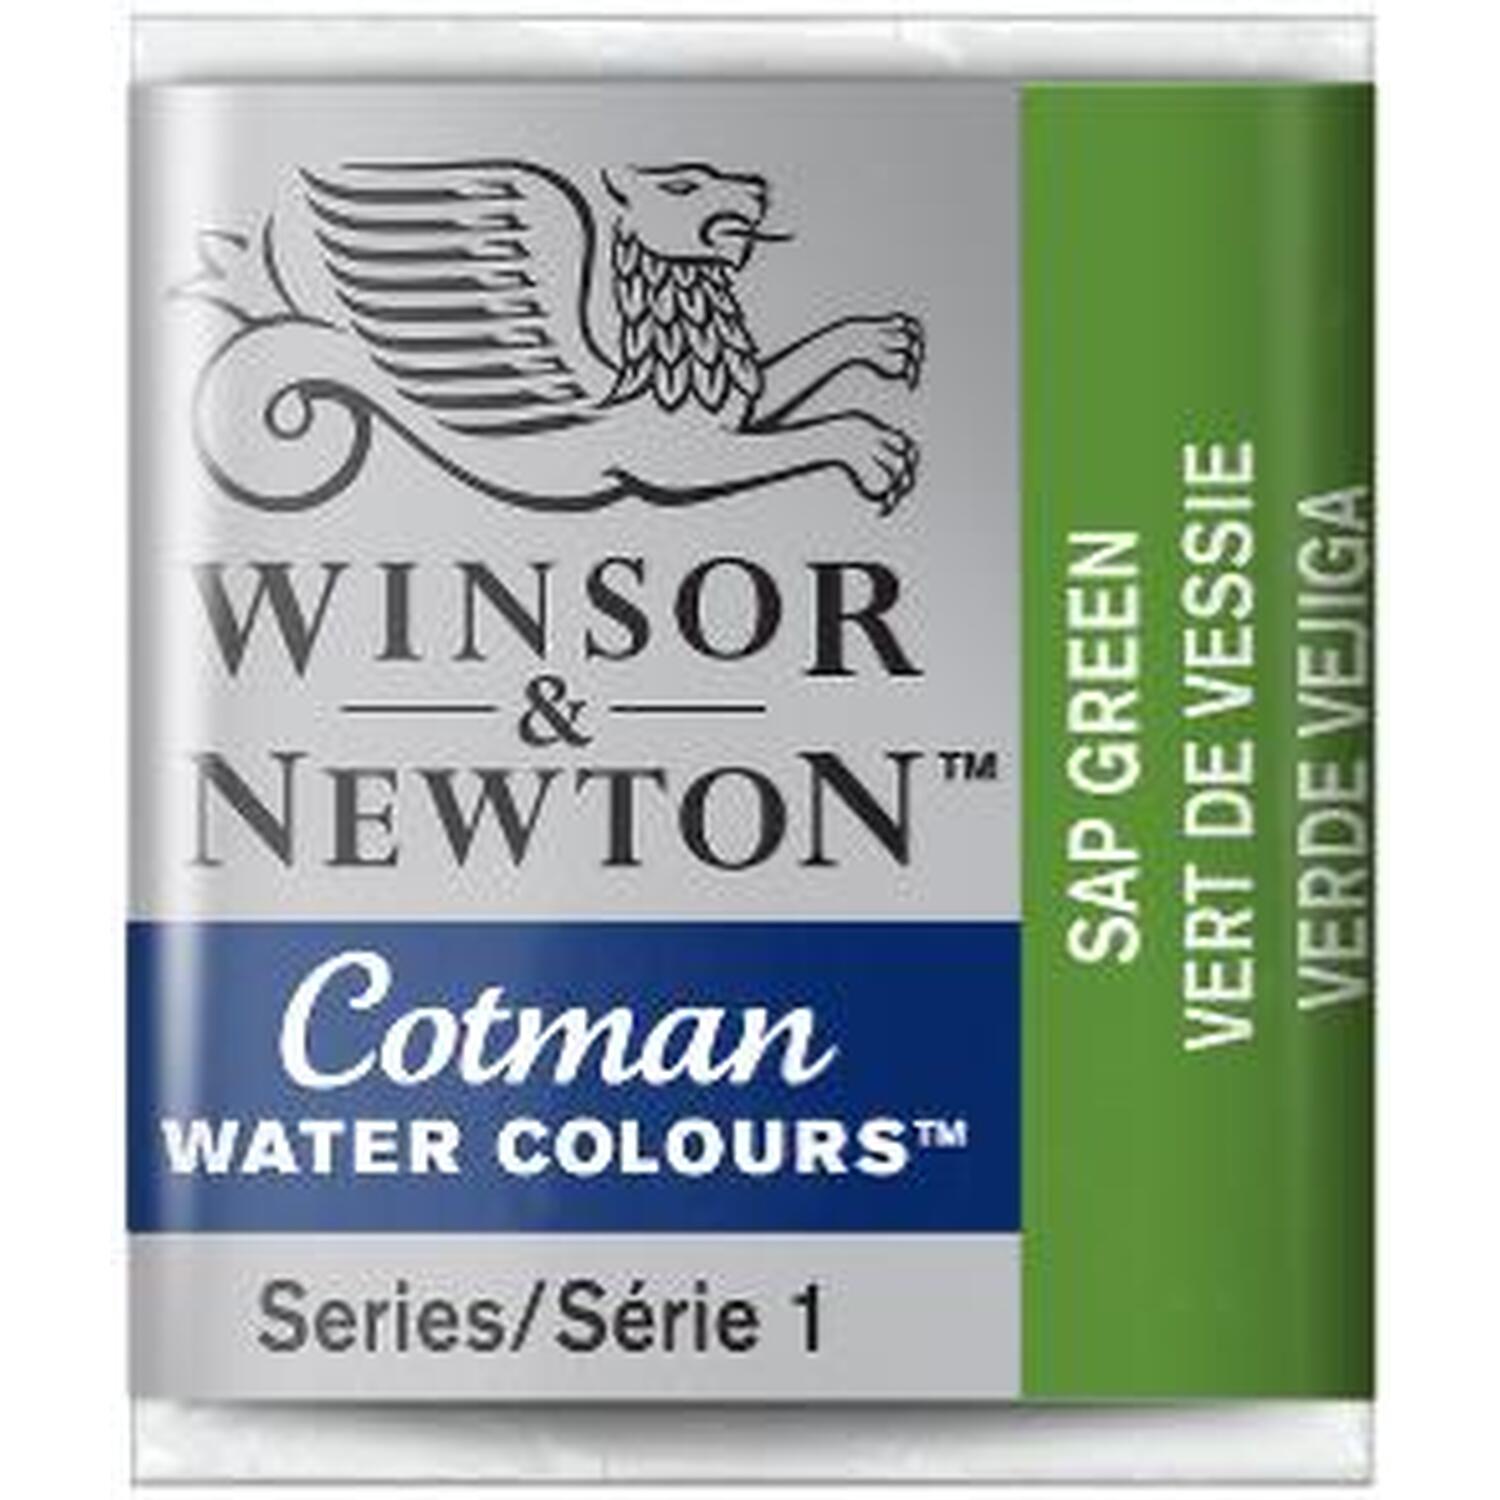 Winsor and Newton Cotman Watercolour Half Pan Paint - Sap Green Image